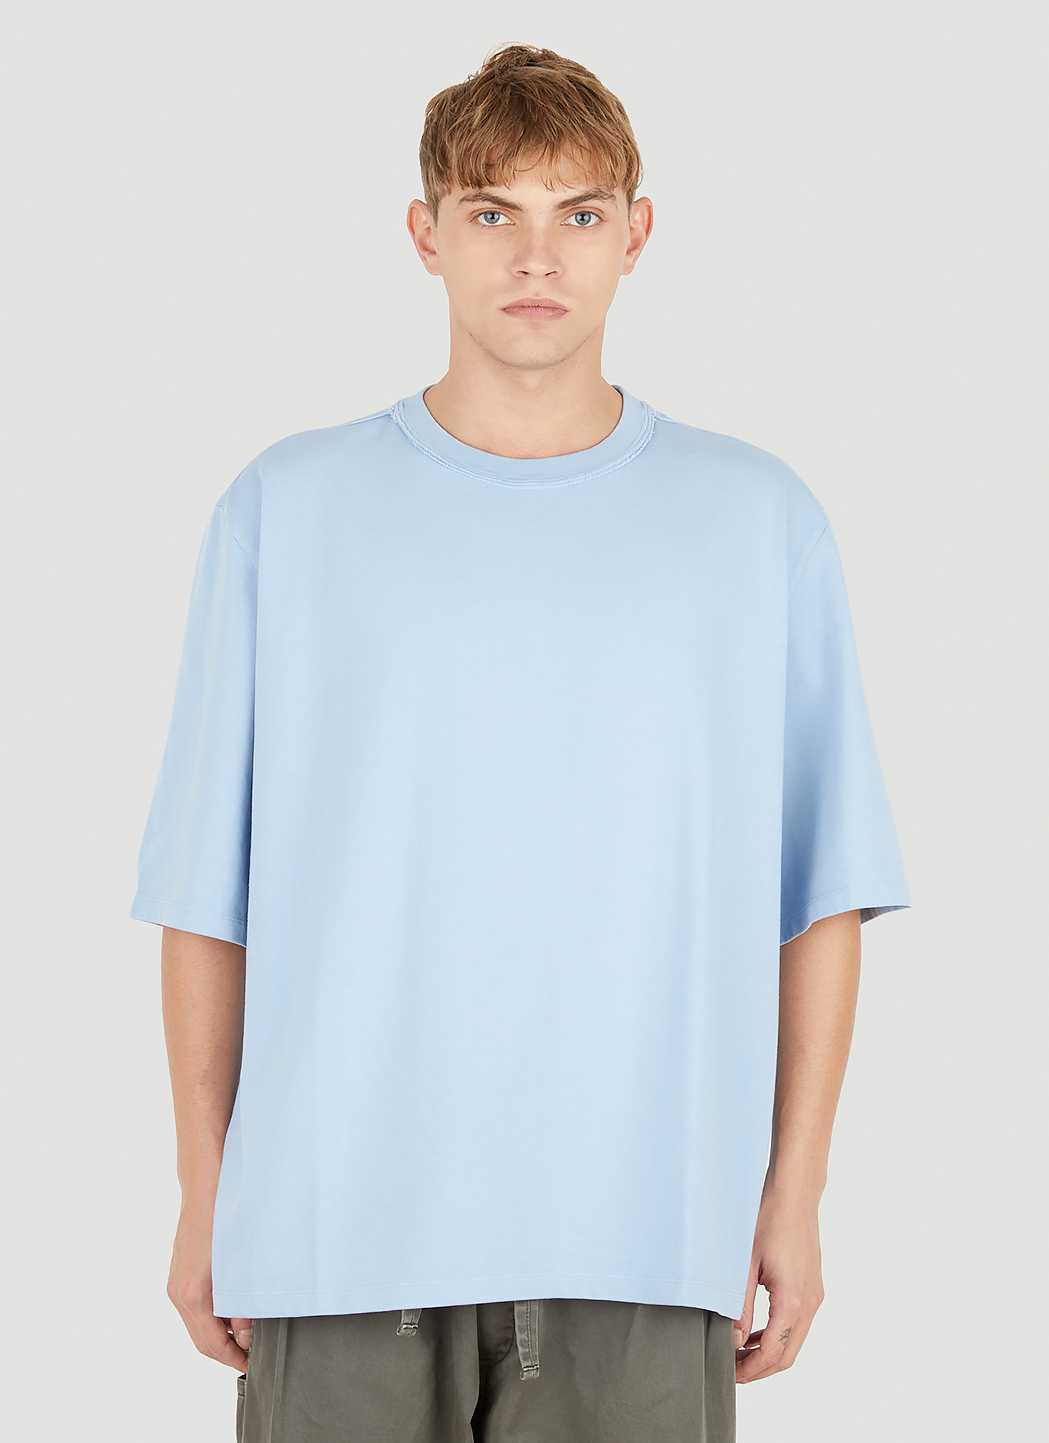 Camiel Fortgens Big T-Shirt in Blue | LN-CC®